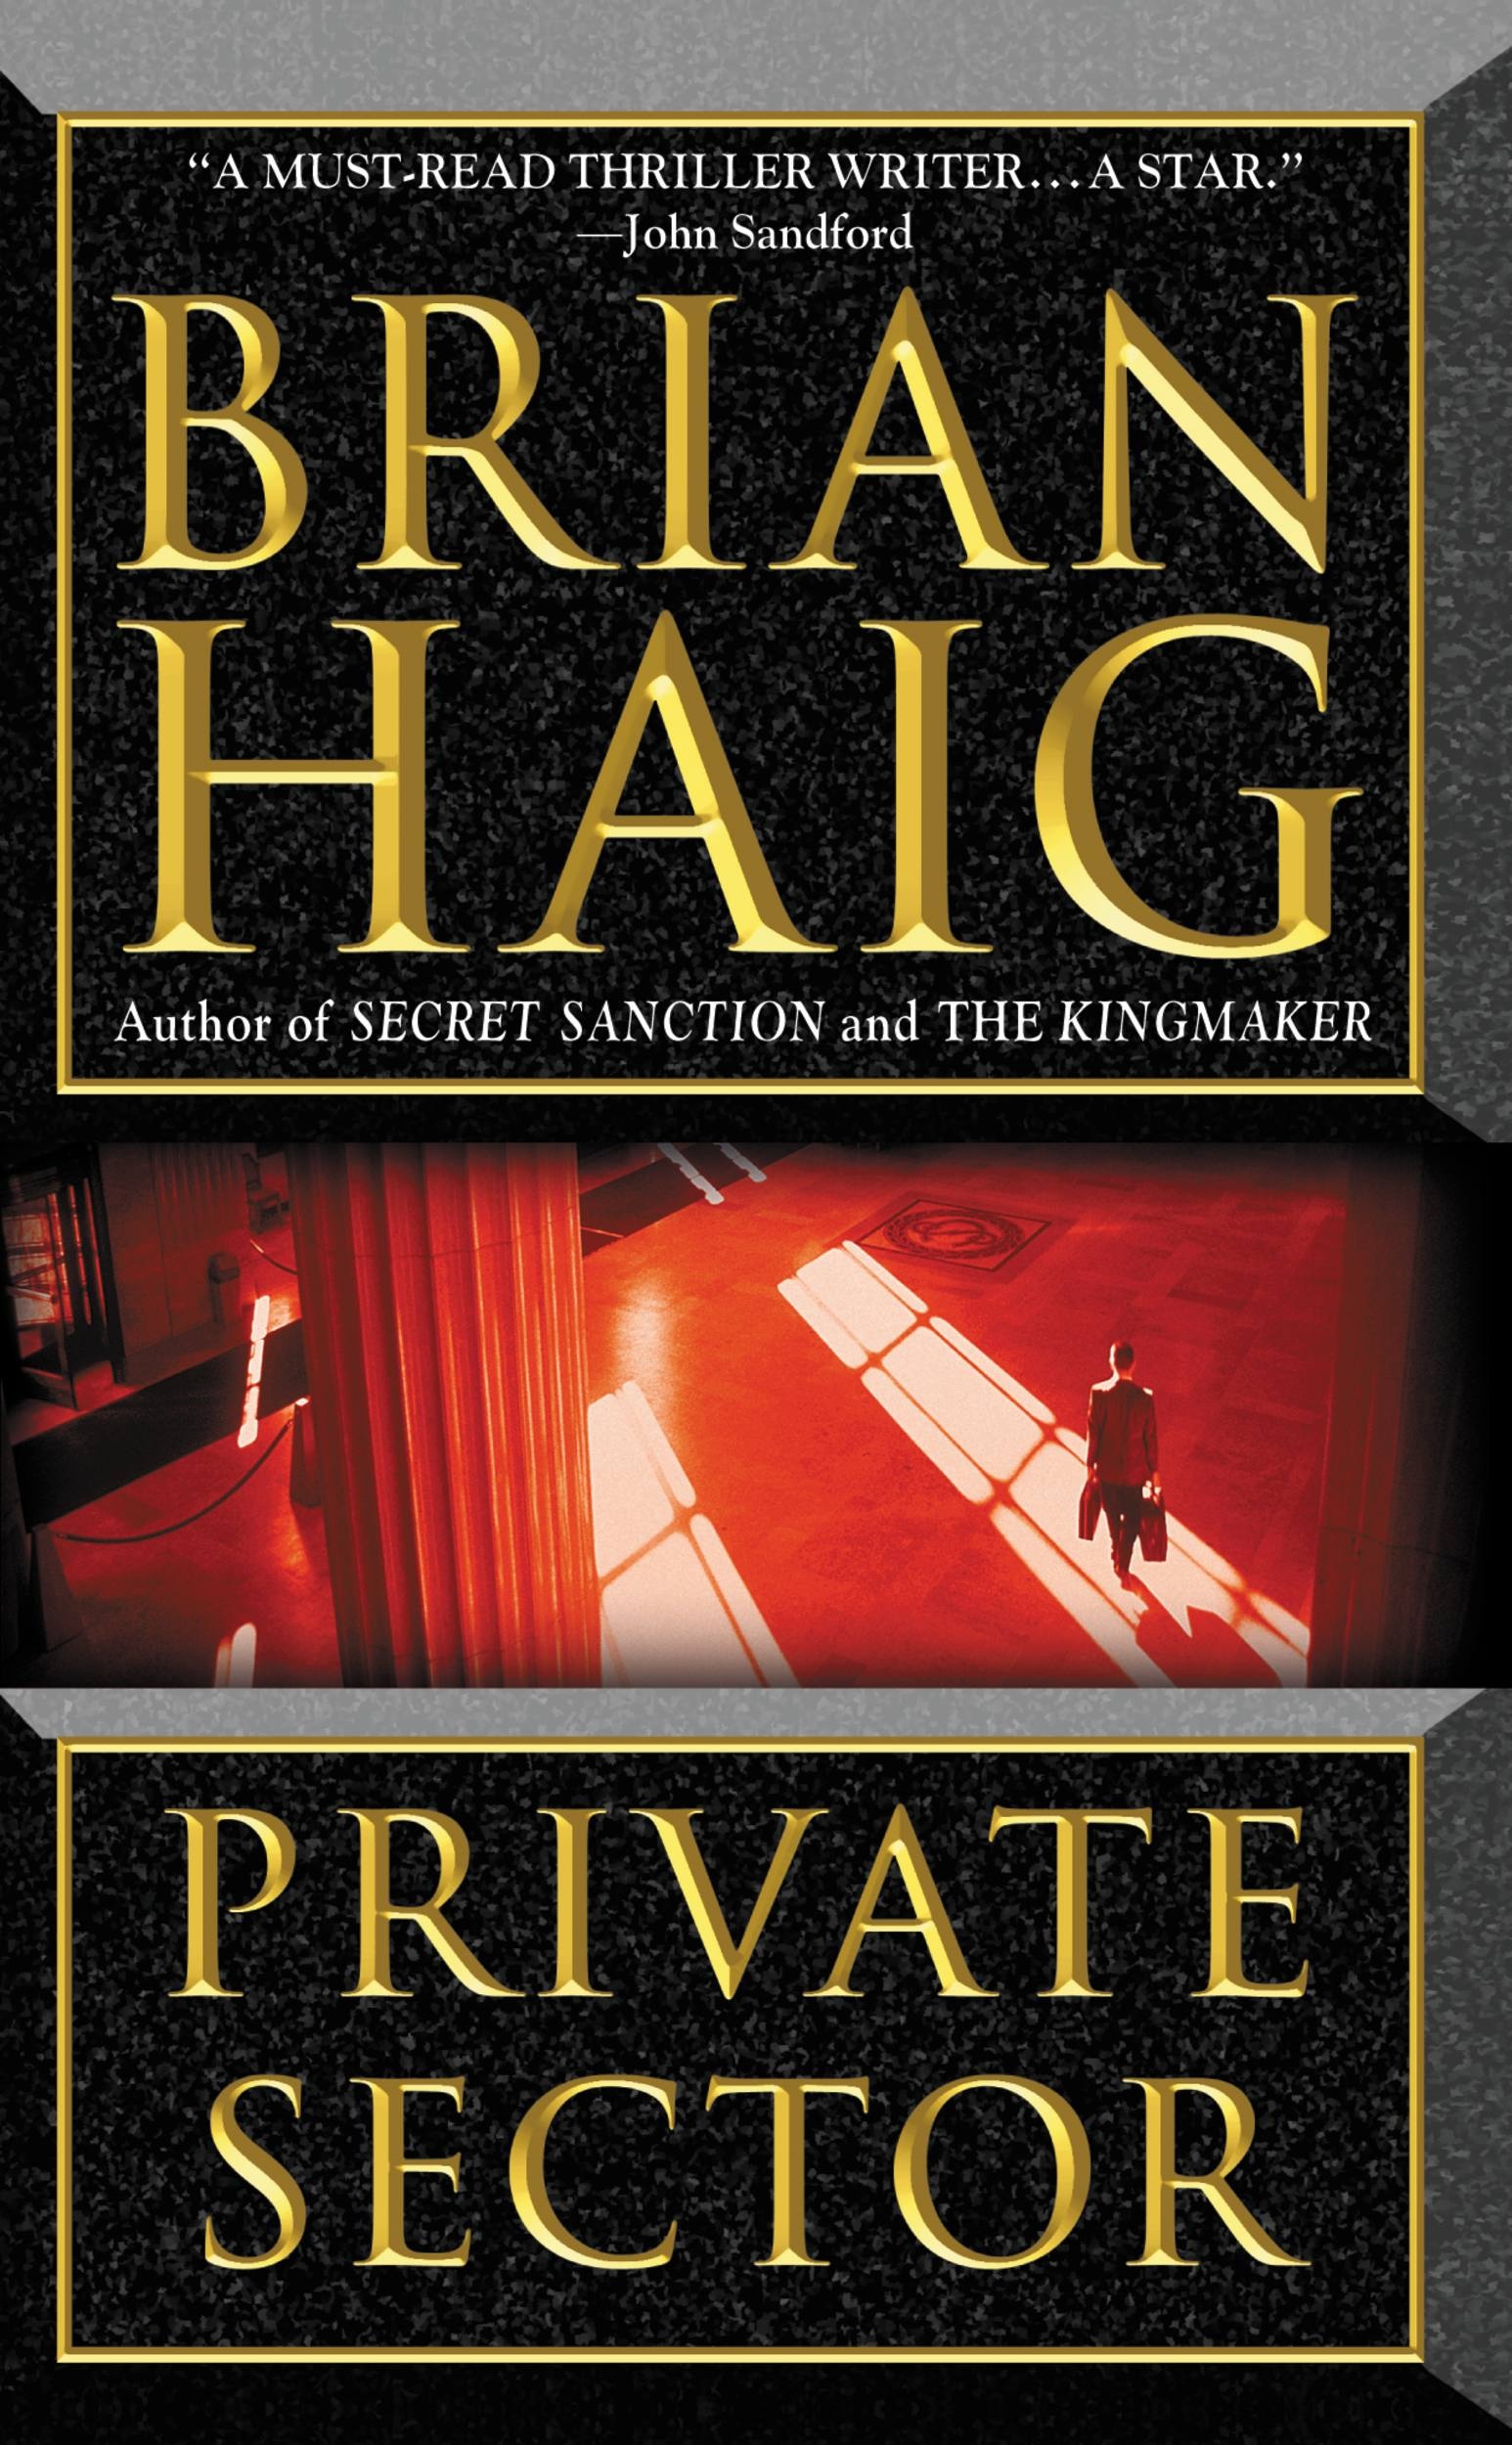 Private обложки. Брайан на английском. Сектор 17 книга. Private book